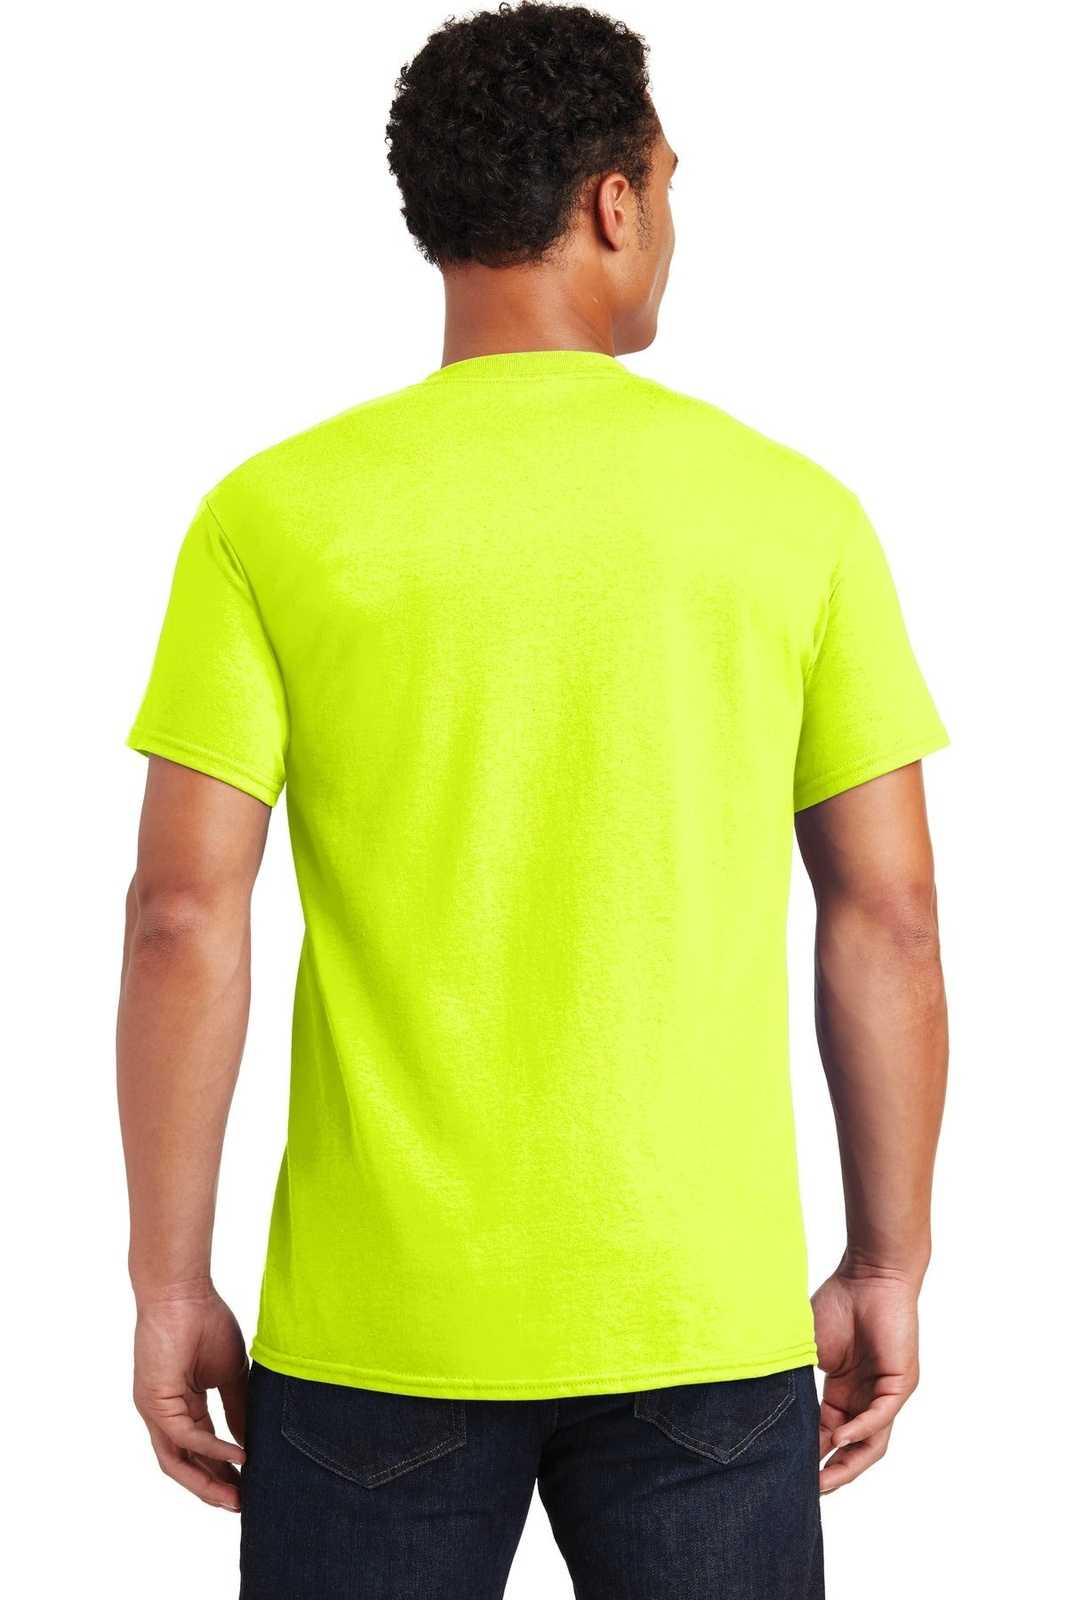 Gildan 2000 Ultra Cotton 100% Cotton T-Shirt - Safety Green - HIT a Double